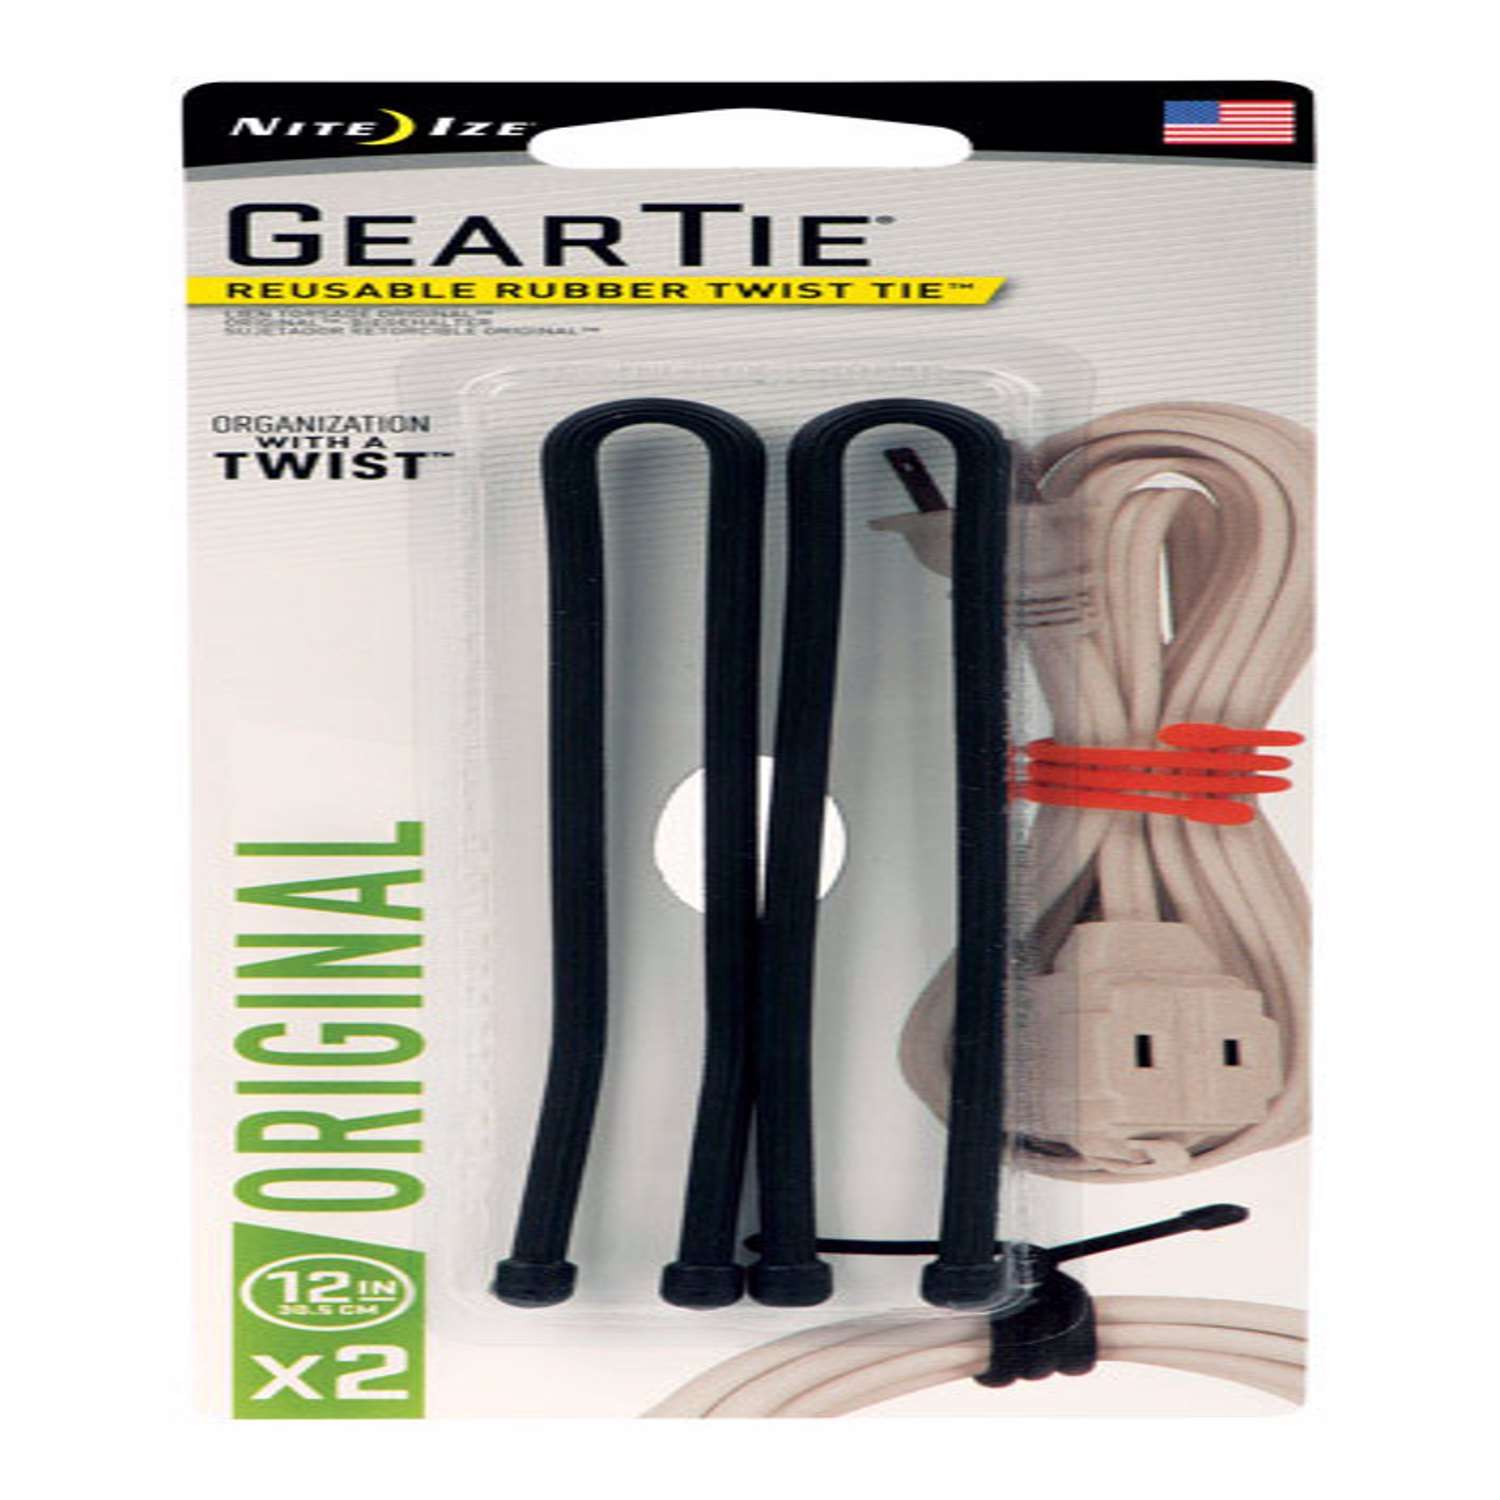 Releasable Zip Ties Reusable Multi-Purpose Cable Ties 12 Inch Gear Tie Twist 3 